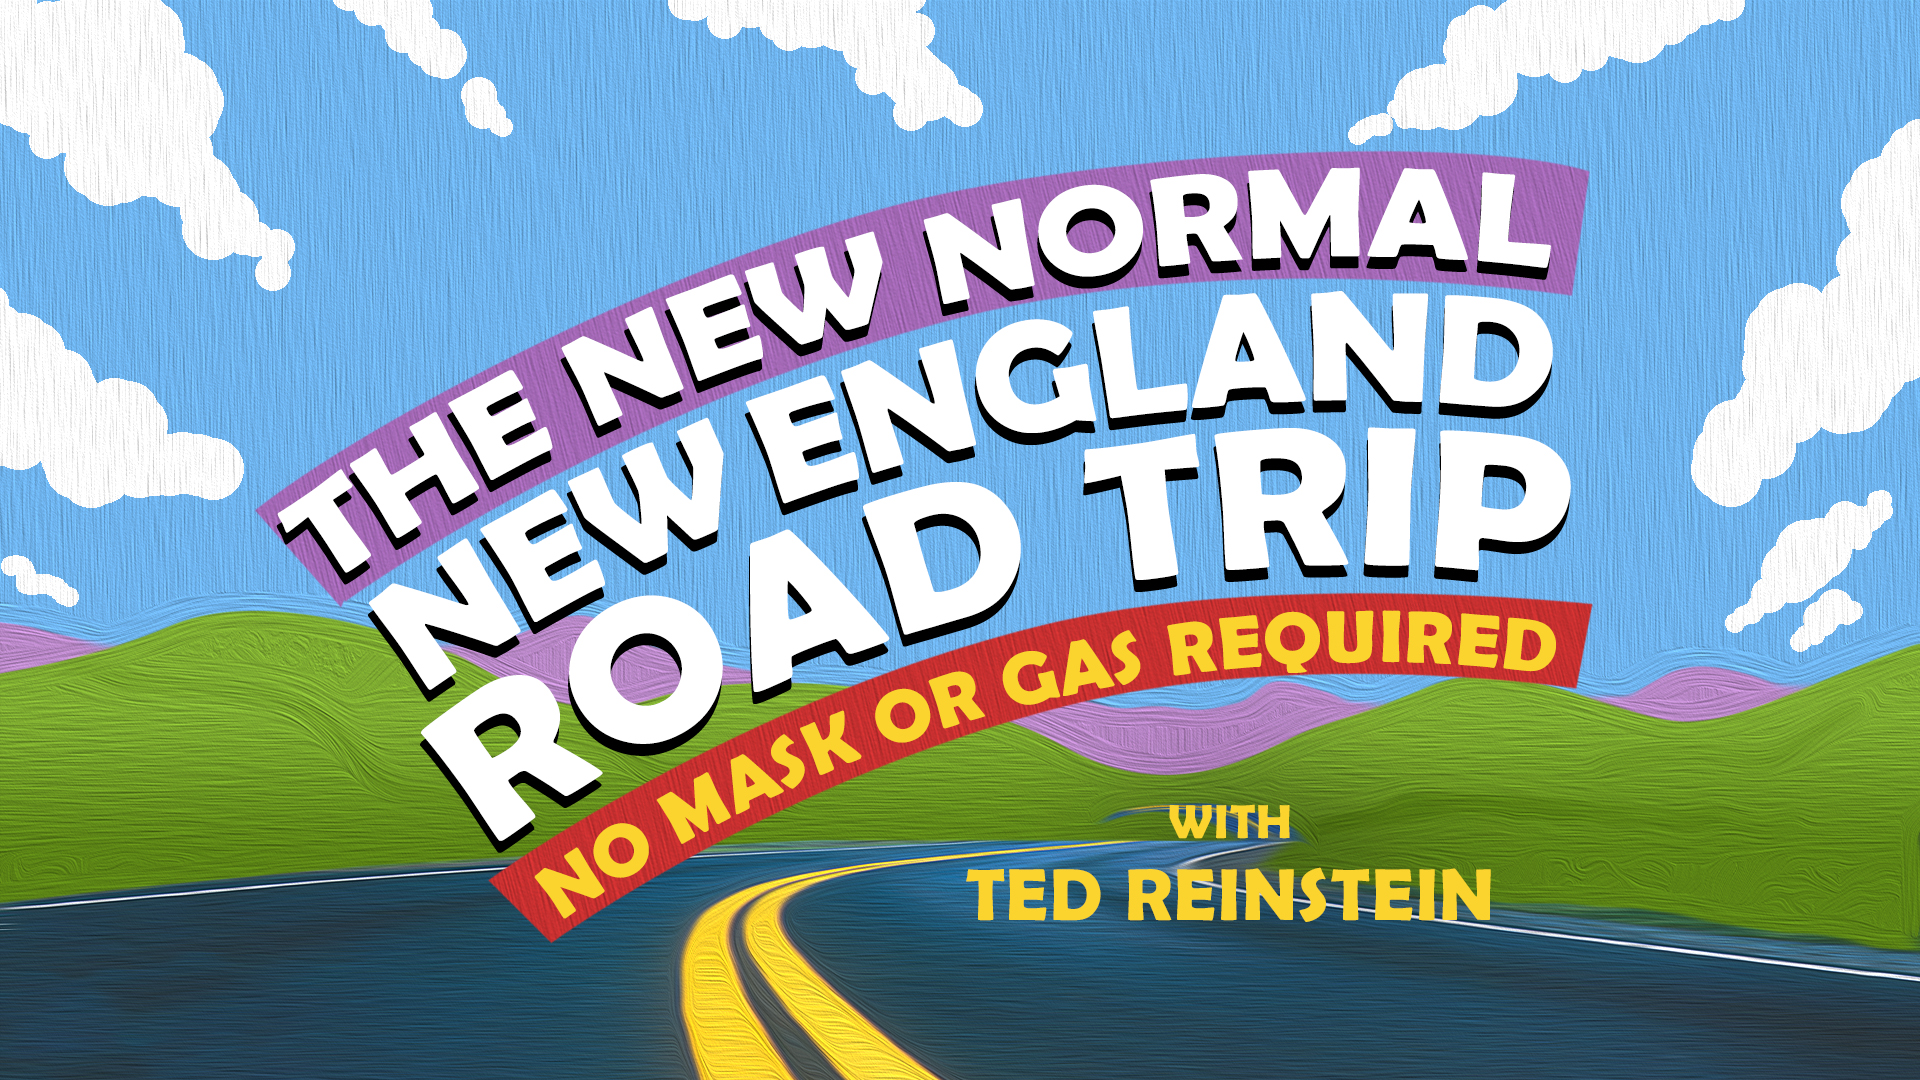 New England Road Trip